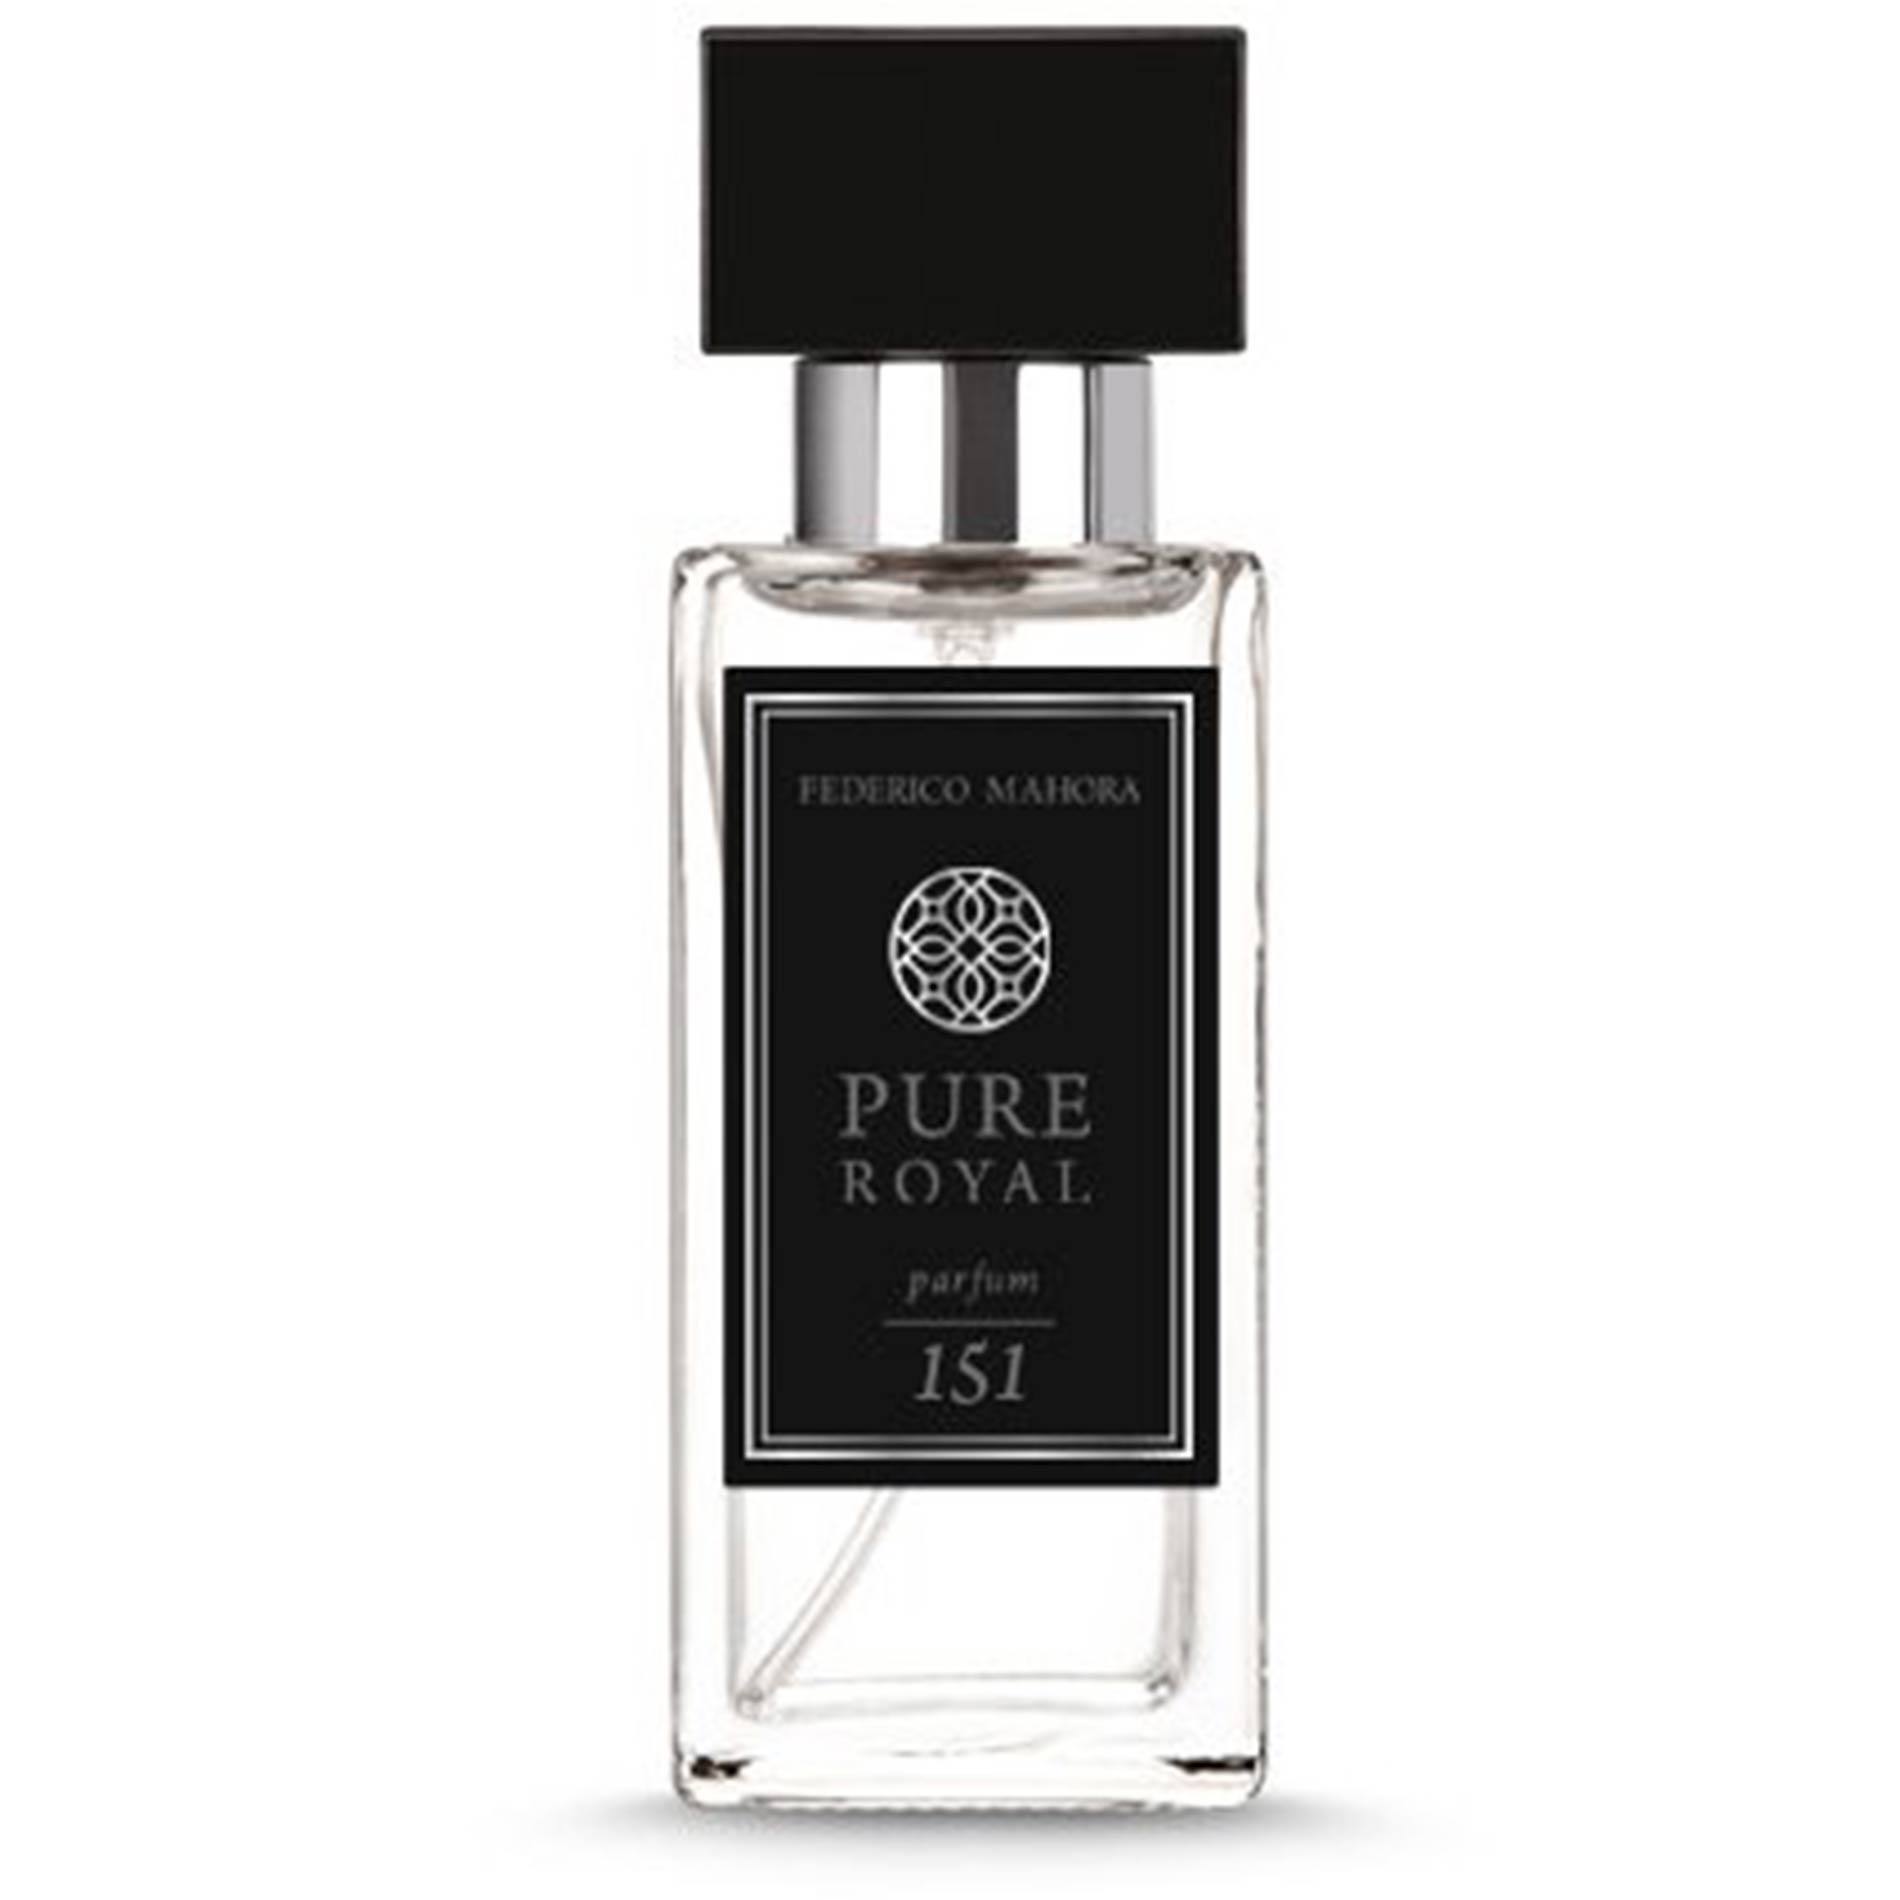 pure royal 151 parfum federico mahora